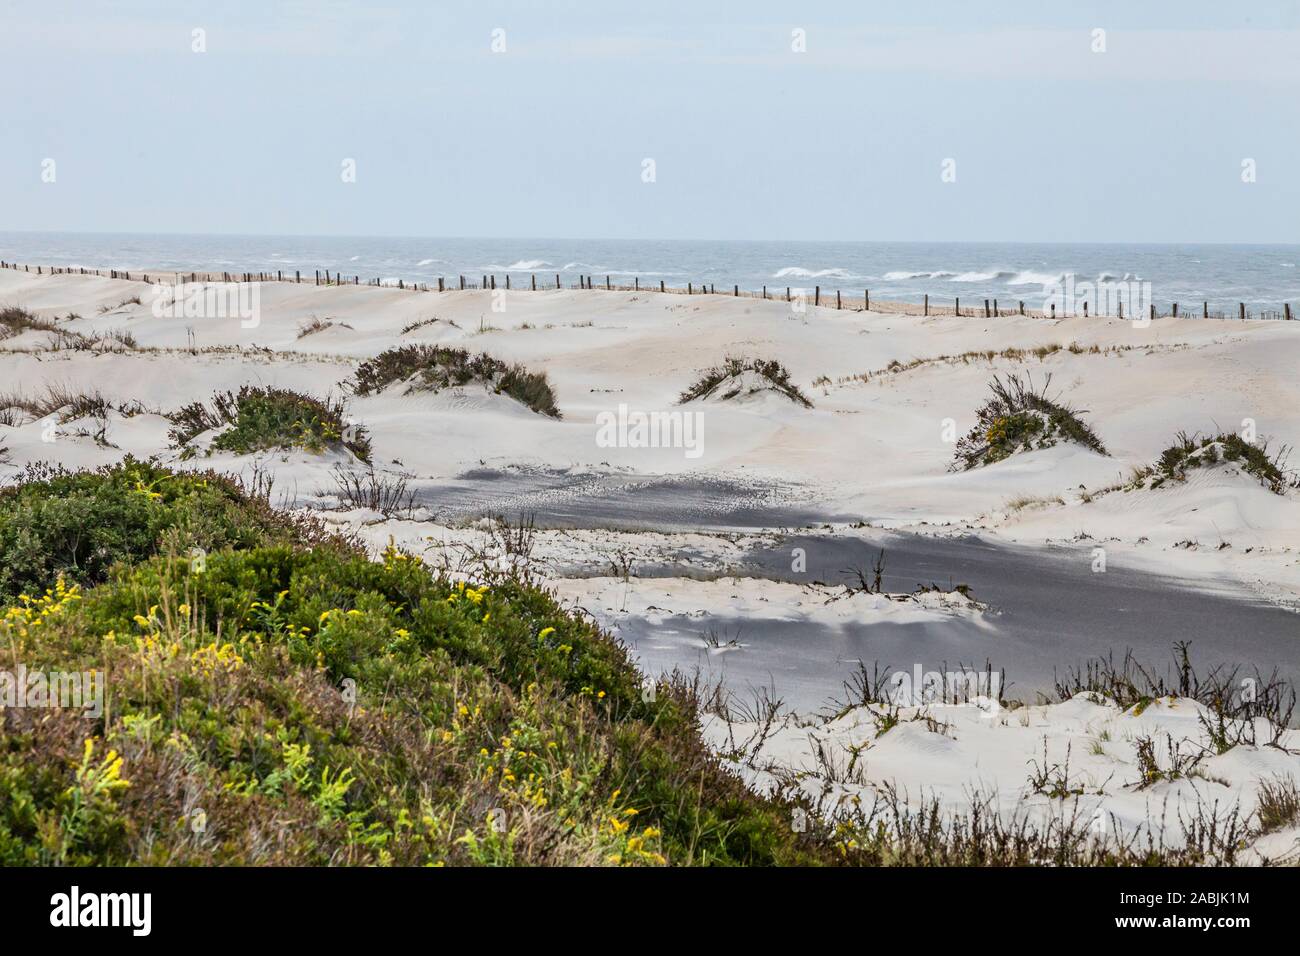 The Atlantic ocean along the beaches and sand dunes of Assateague Island National Seashore, Maryland, USA. Stock Photo